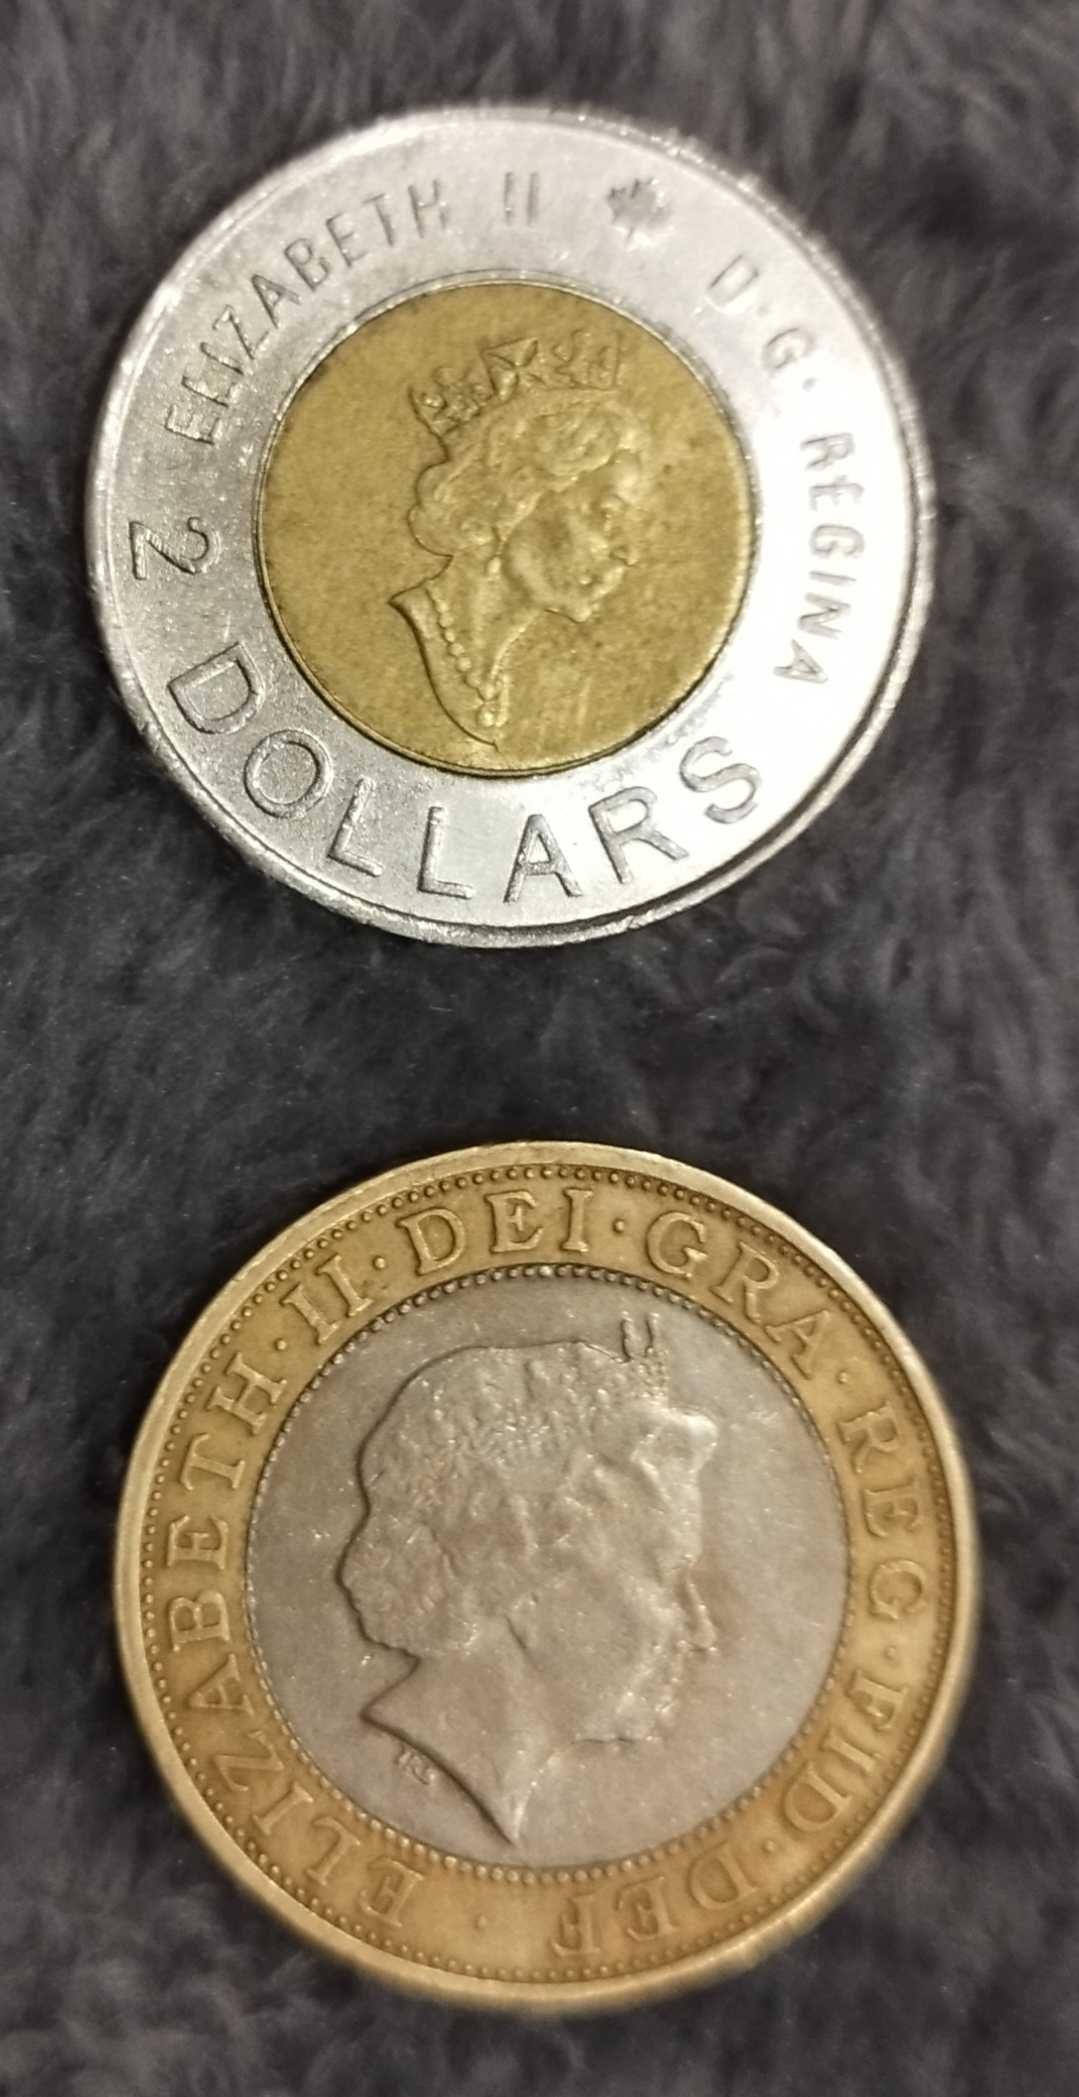 Stare monety 2 dolary 2 funty i 5 Falkland z Elizabeth II 1999 do 2004